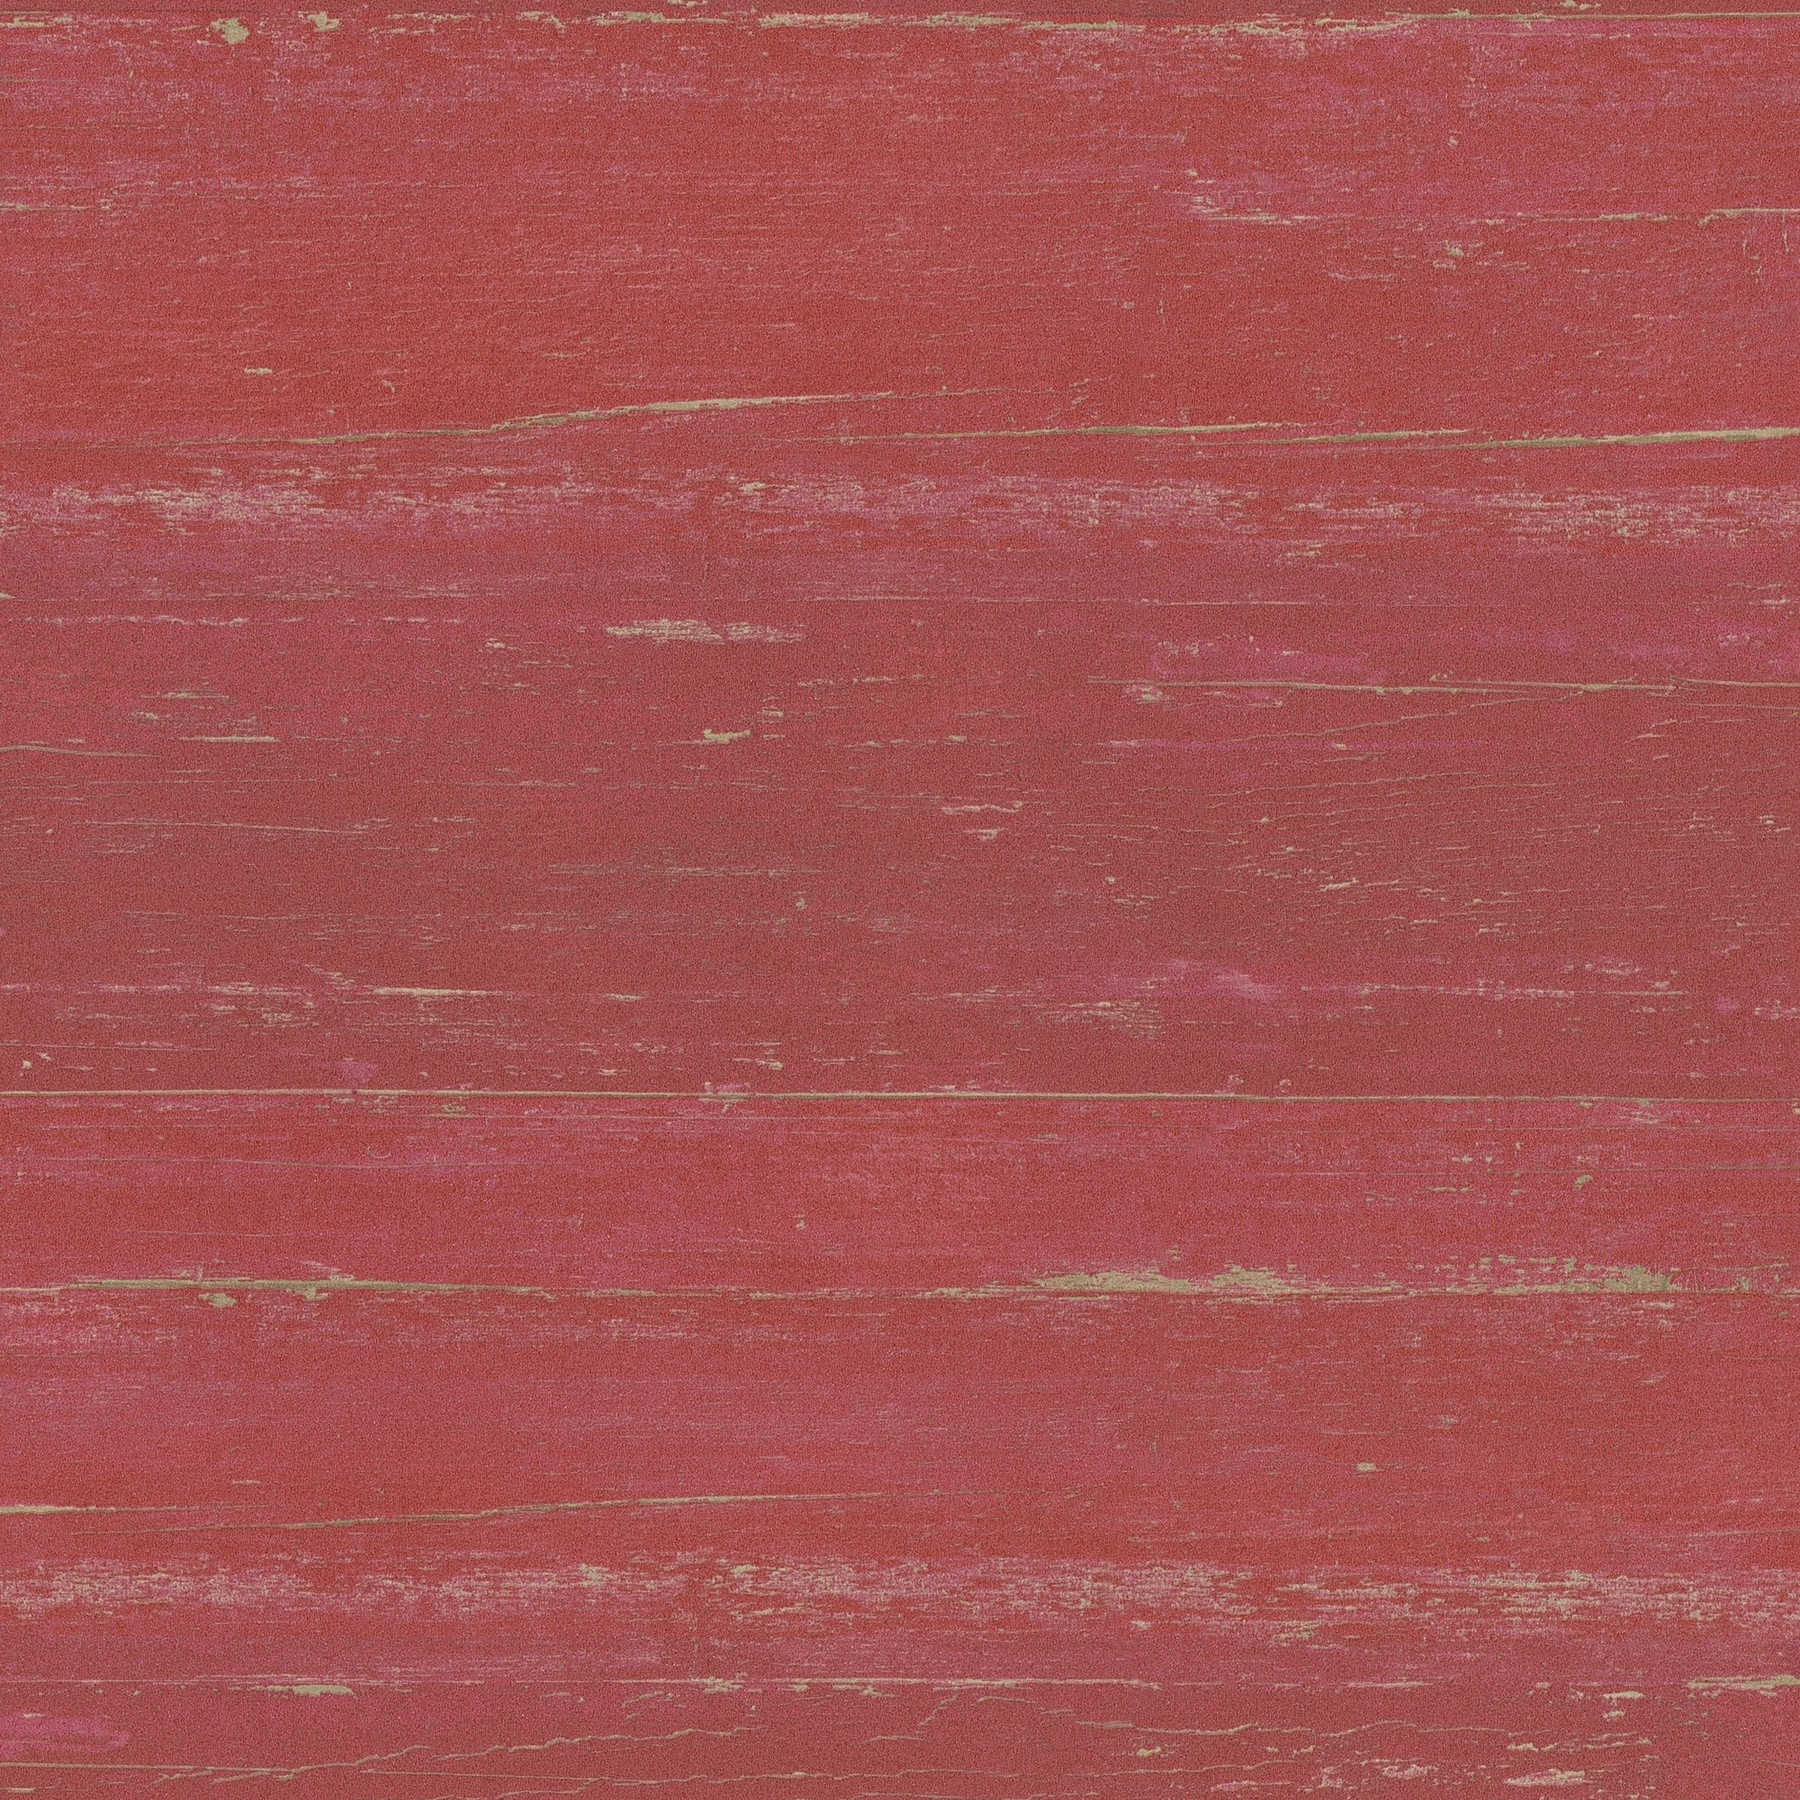         Holz Tapete mit horizontaler Holzmaserung – Rot
    